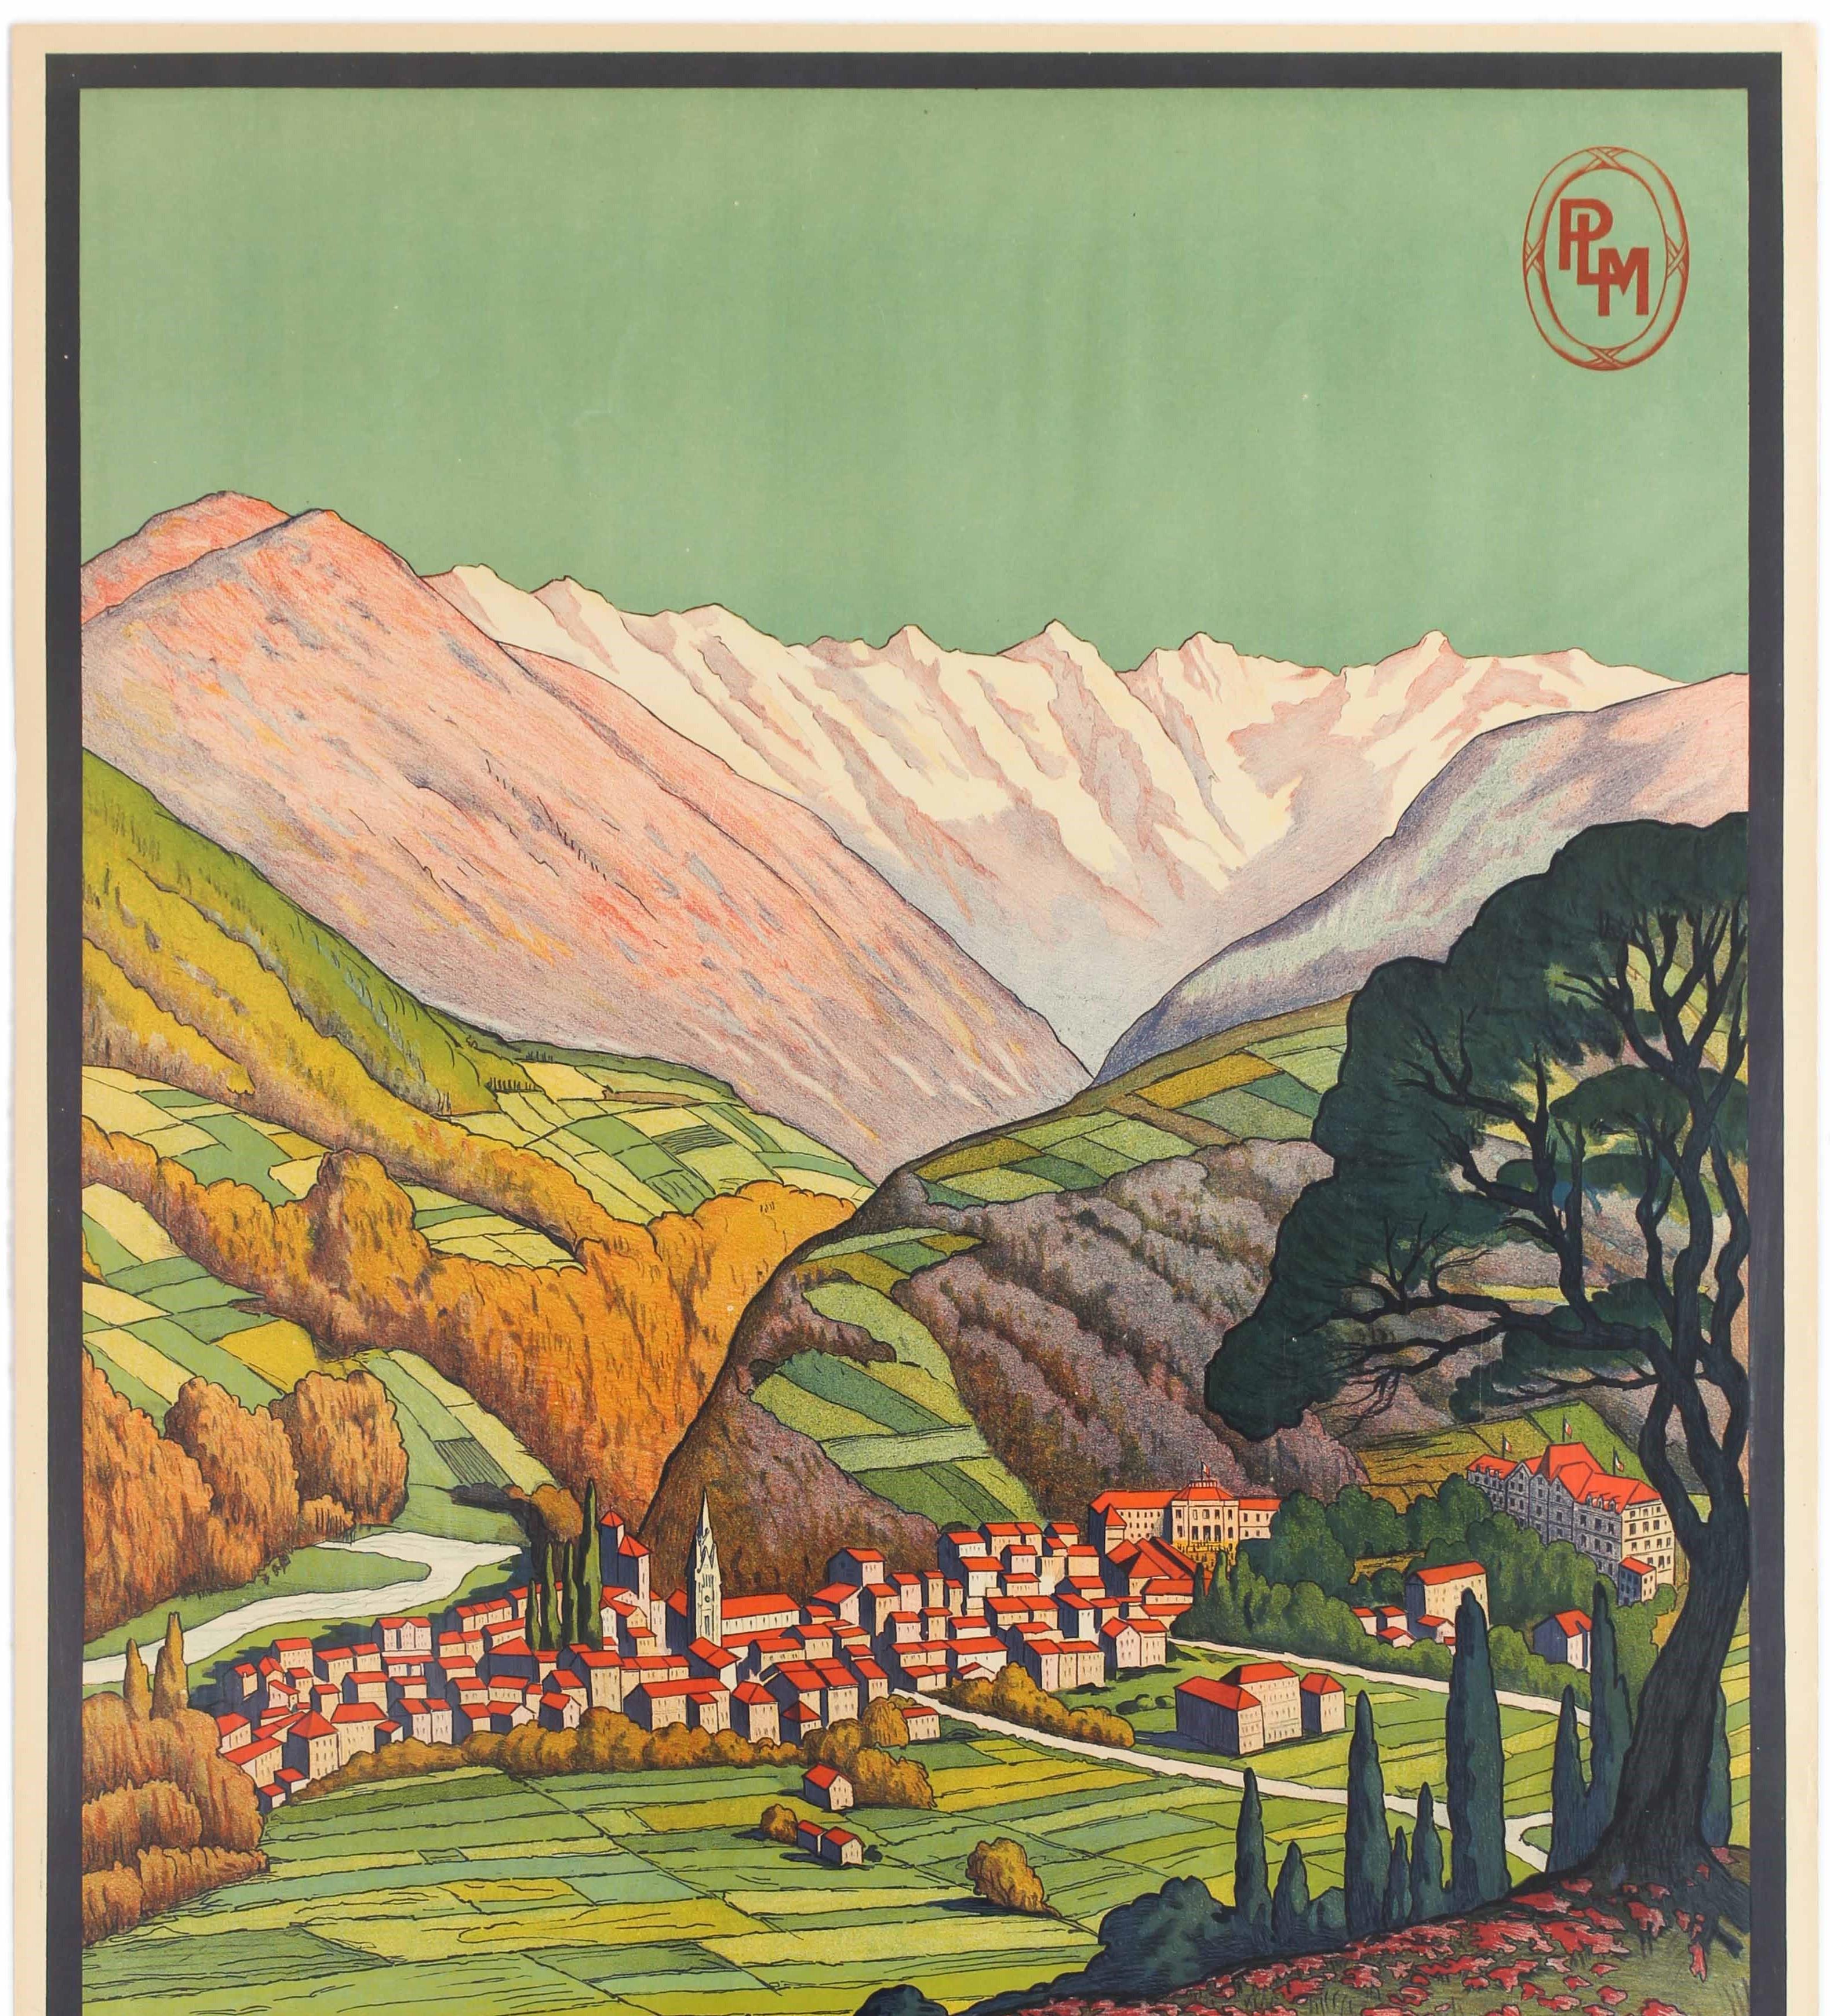 Original Vintage Poster Allevard Les Bains Thermal Spa PLM Railway Travel France - Print by Jean Julien